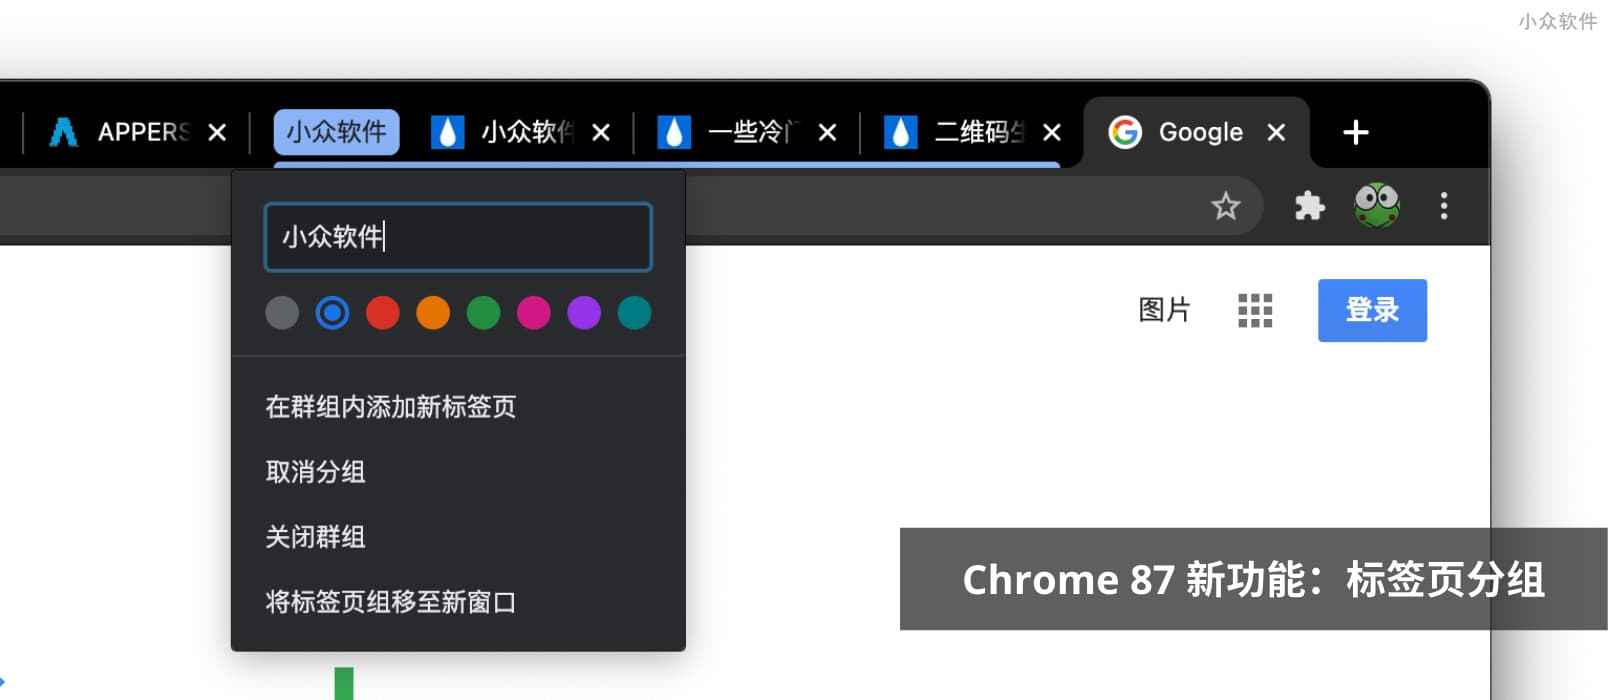 Chrome 87 新功能：标签页分组，可自动分组同网站下标签页